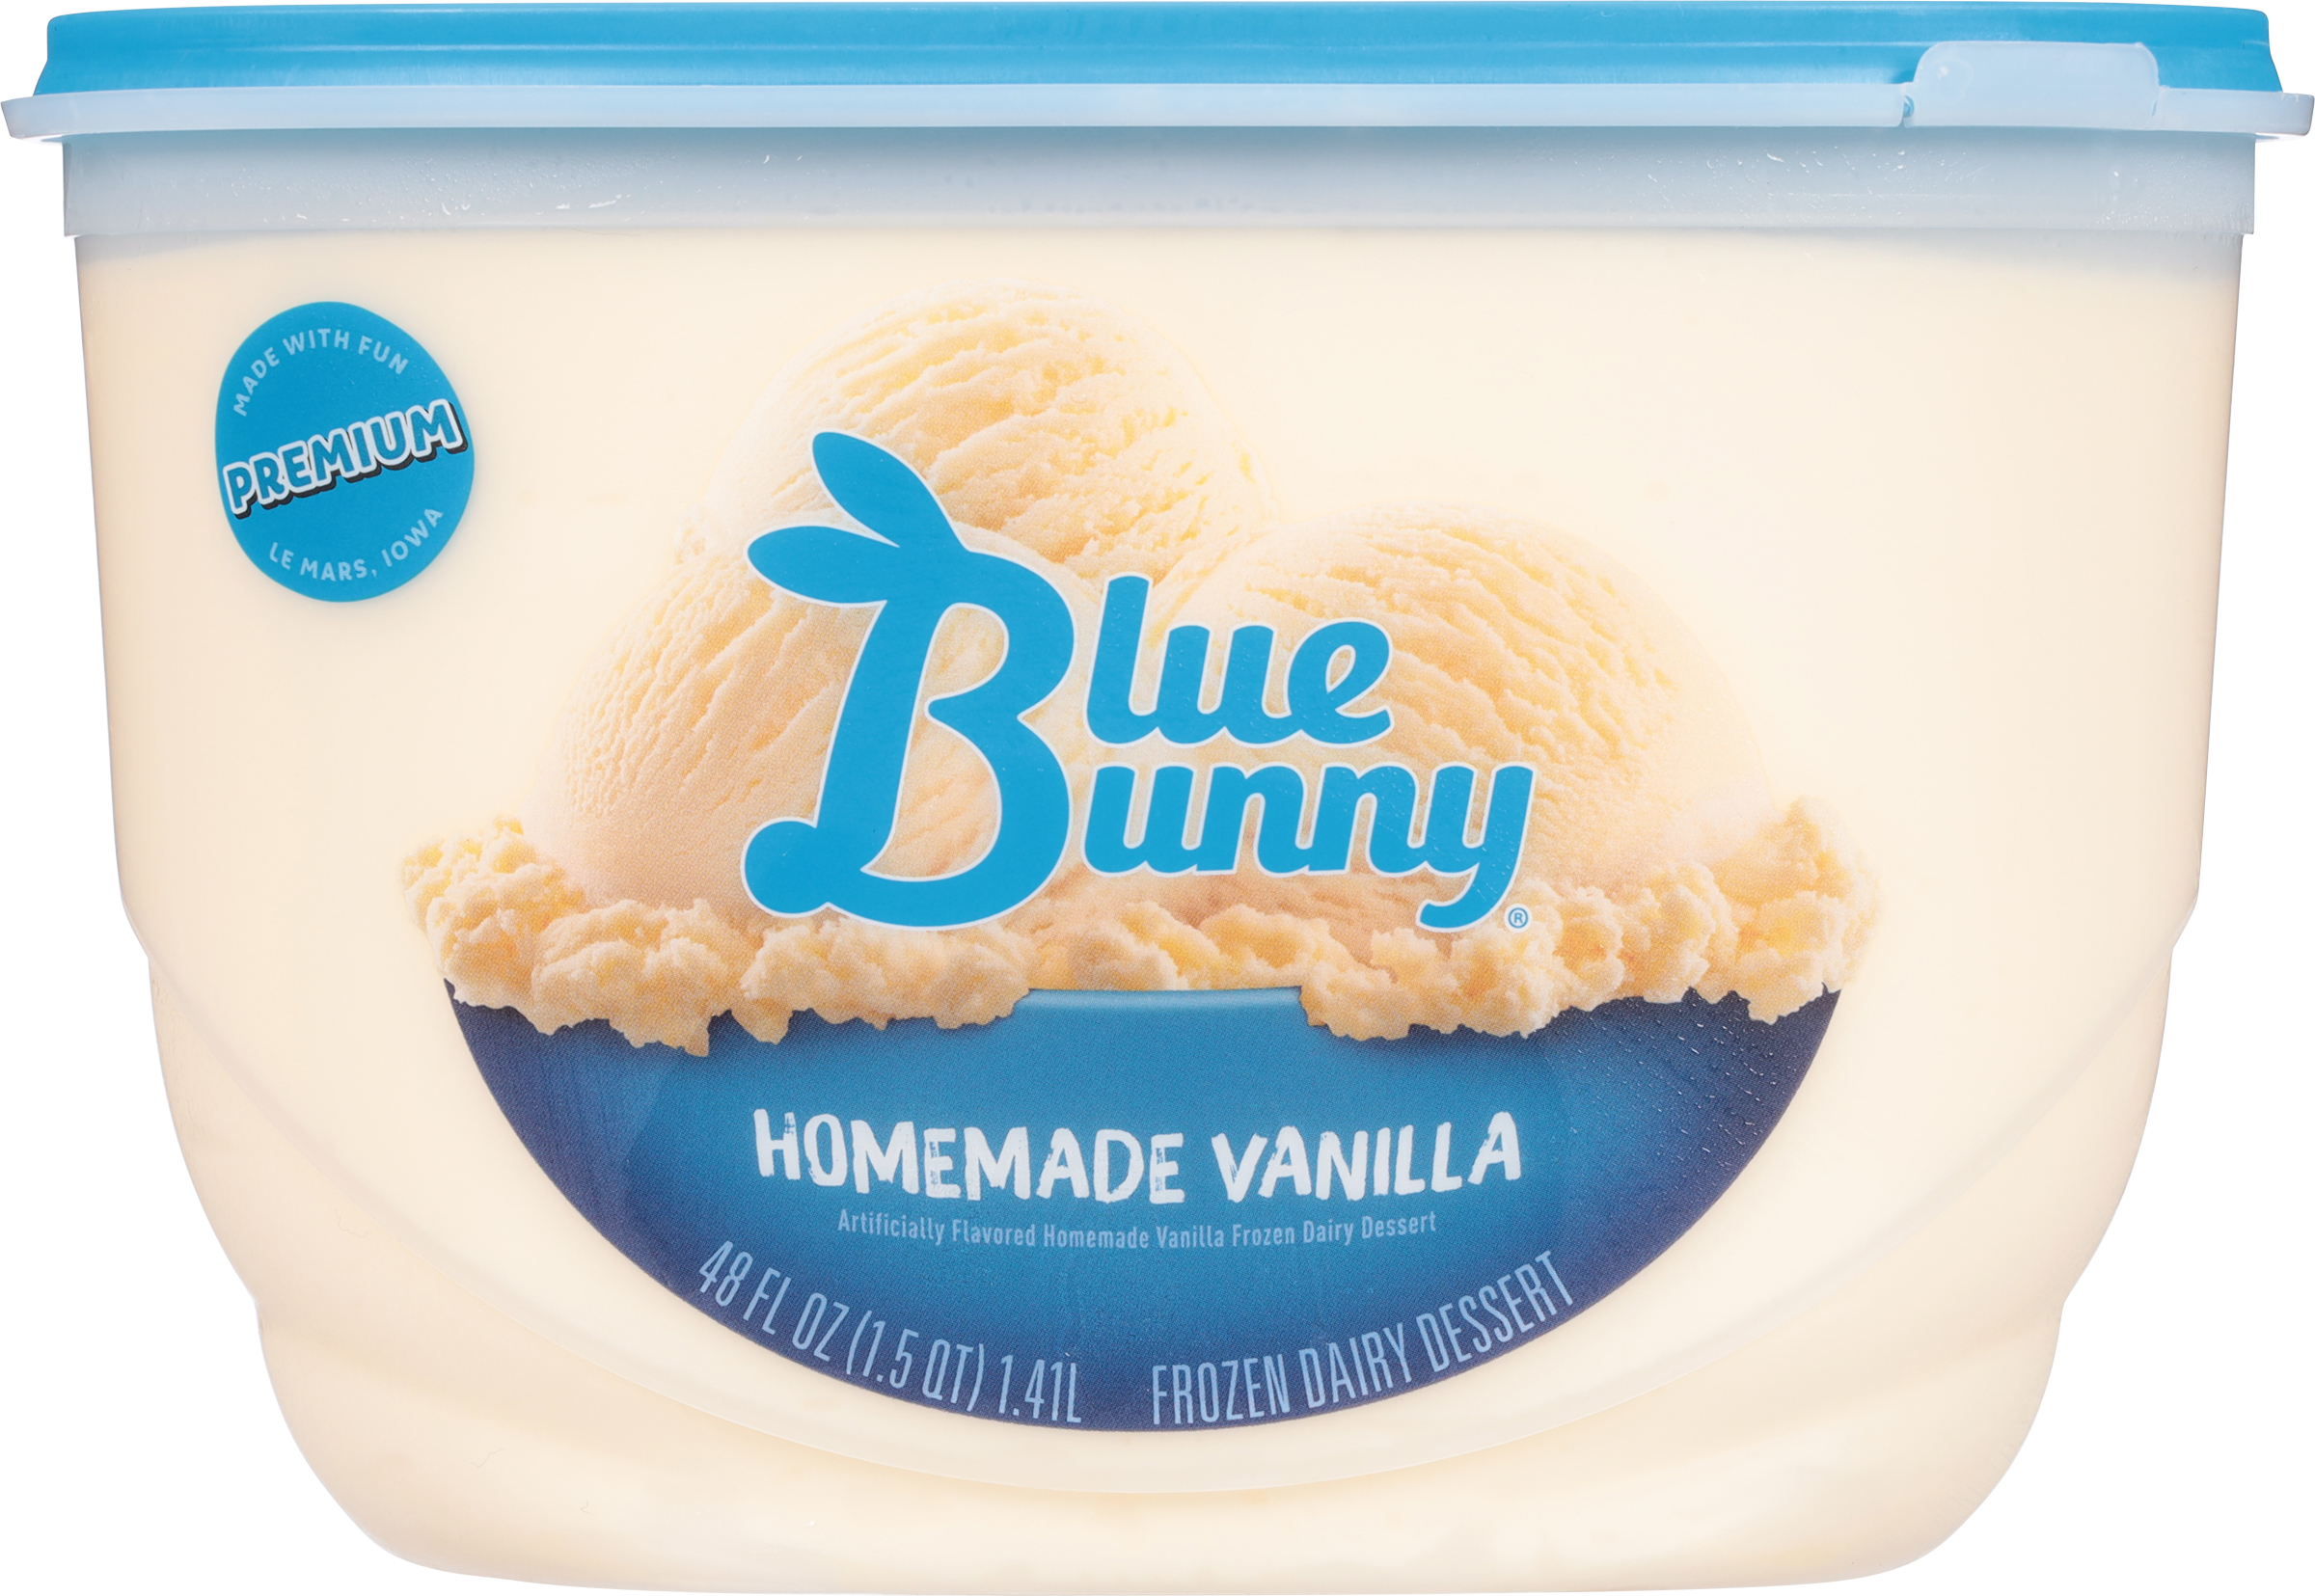 Blue Bell Homemade Vanilla Ice Cream 0.5 gal tub, Ice Cream